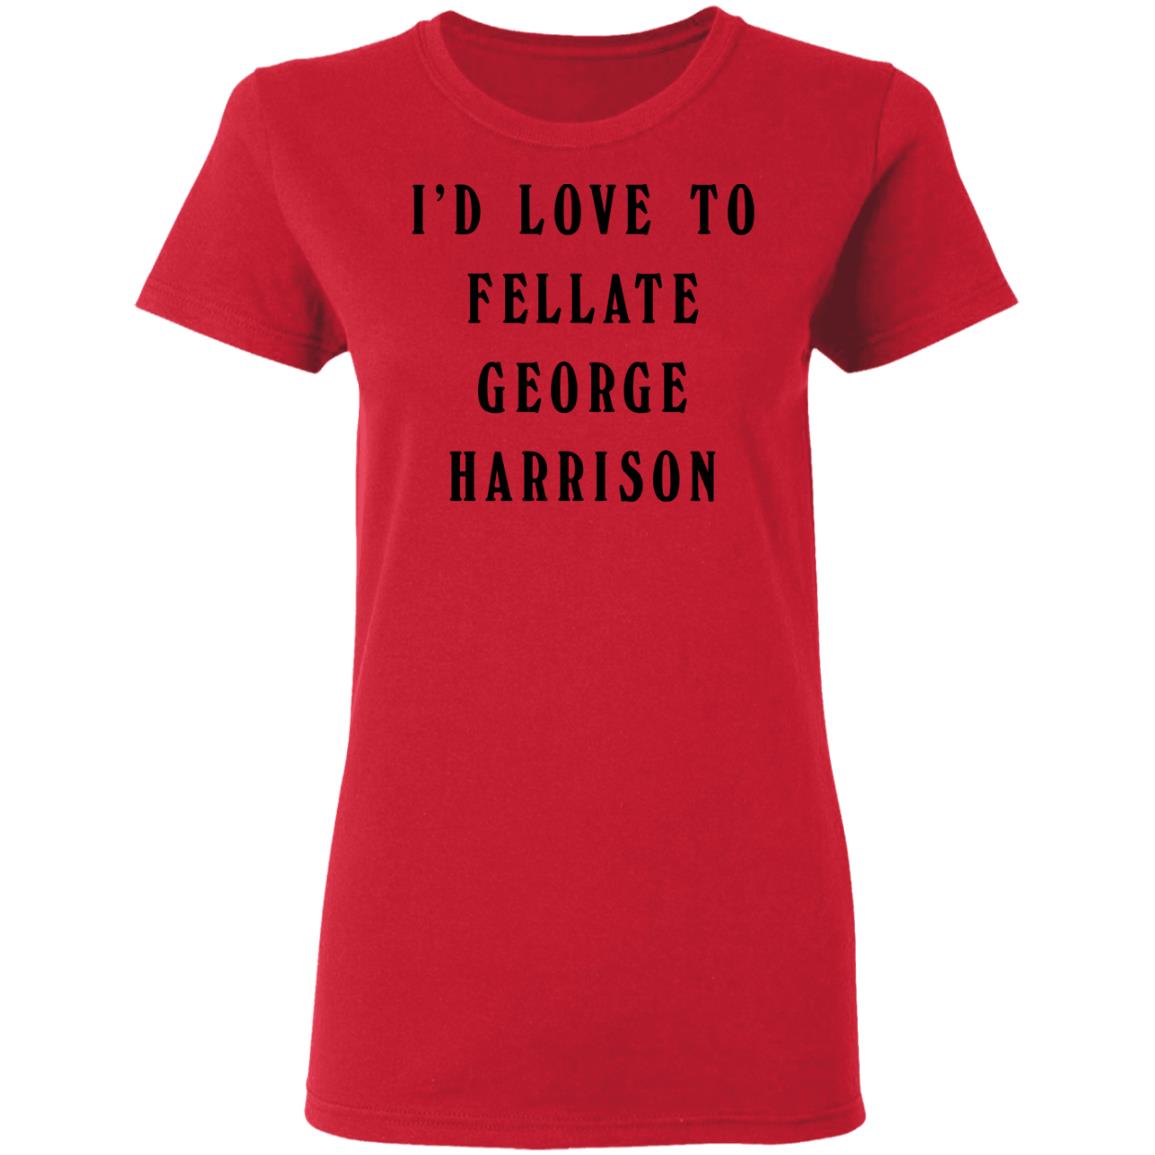 I’d love to fellate george harrison shirt, long sleeve, hoodie